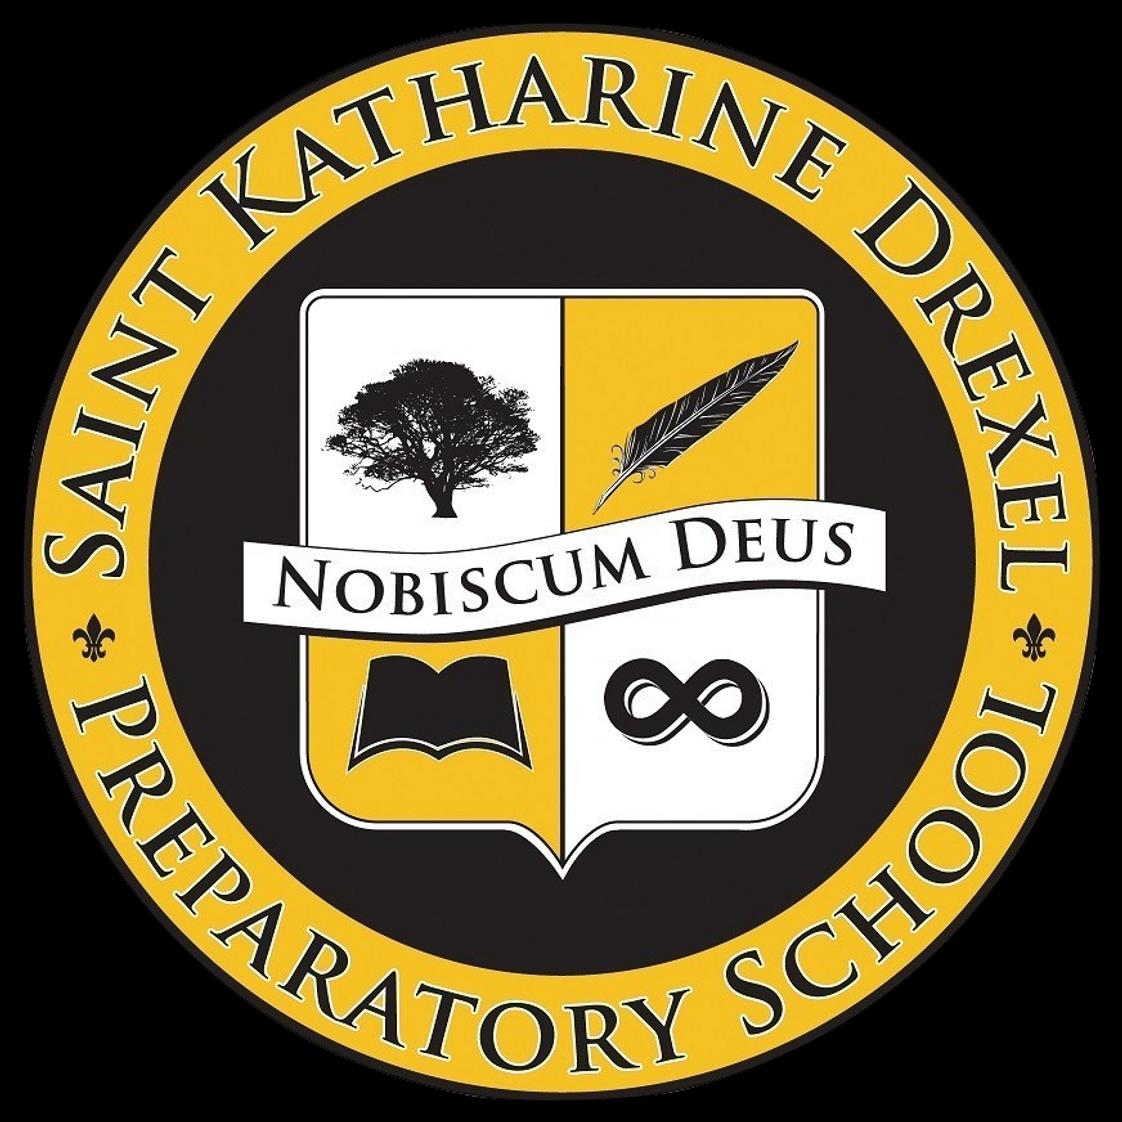 St. Katharine Drexel Preparatory School Photo - St. Katharine Drexel Preparatory School 5116 Magazine Street New Orleans, LA 70115 504 899 6061